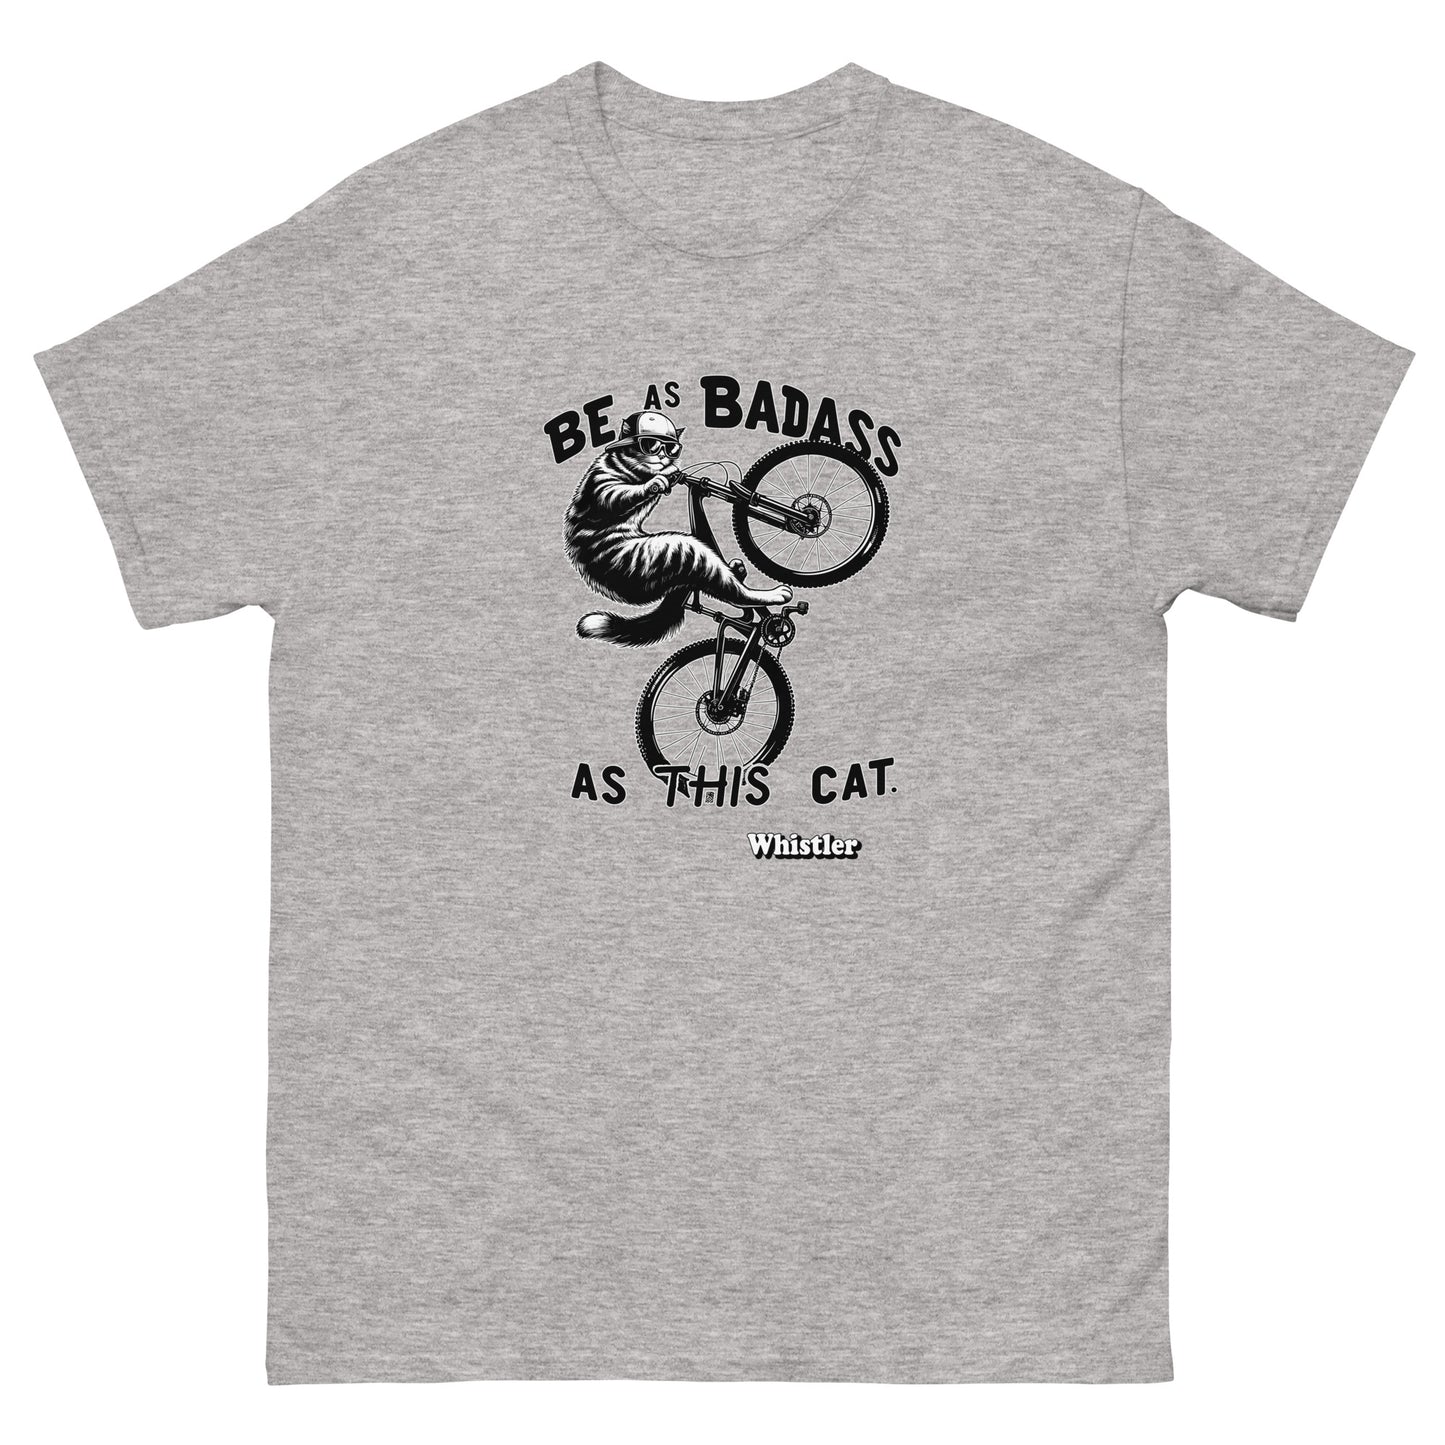 Be As Badass as This Cat T-shirt